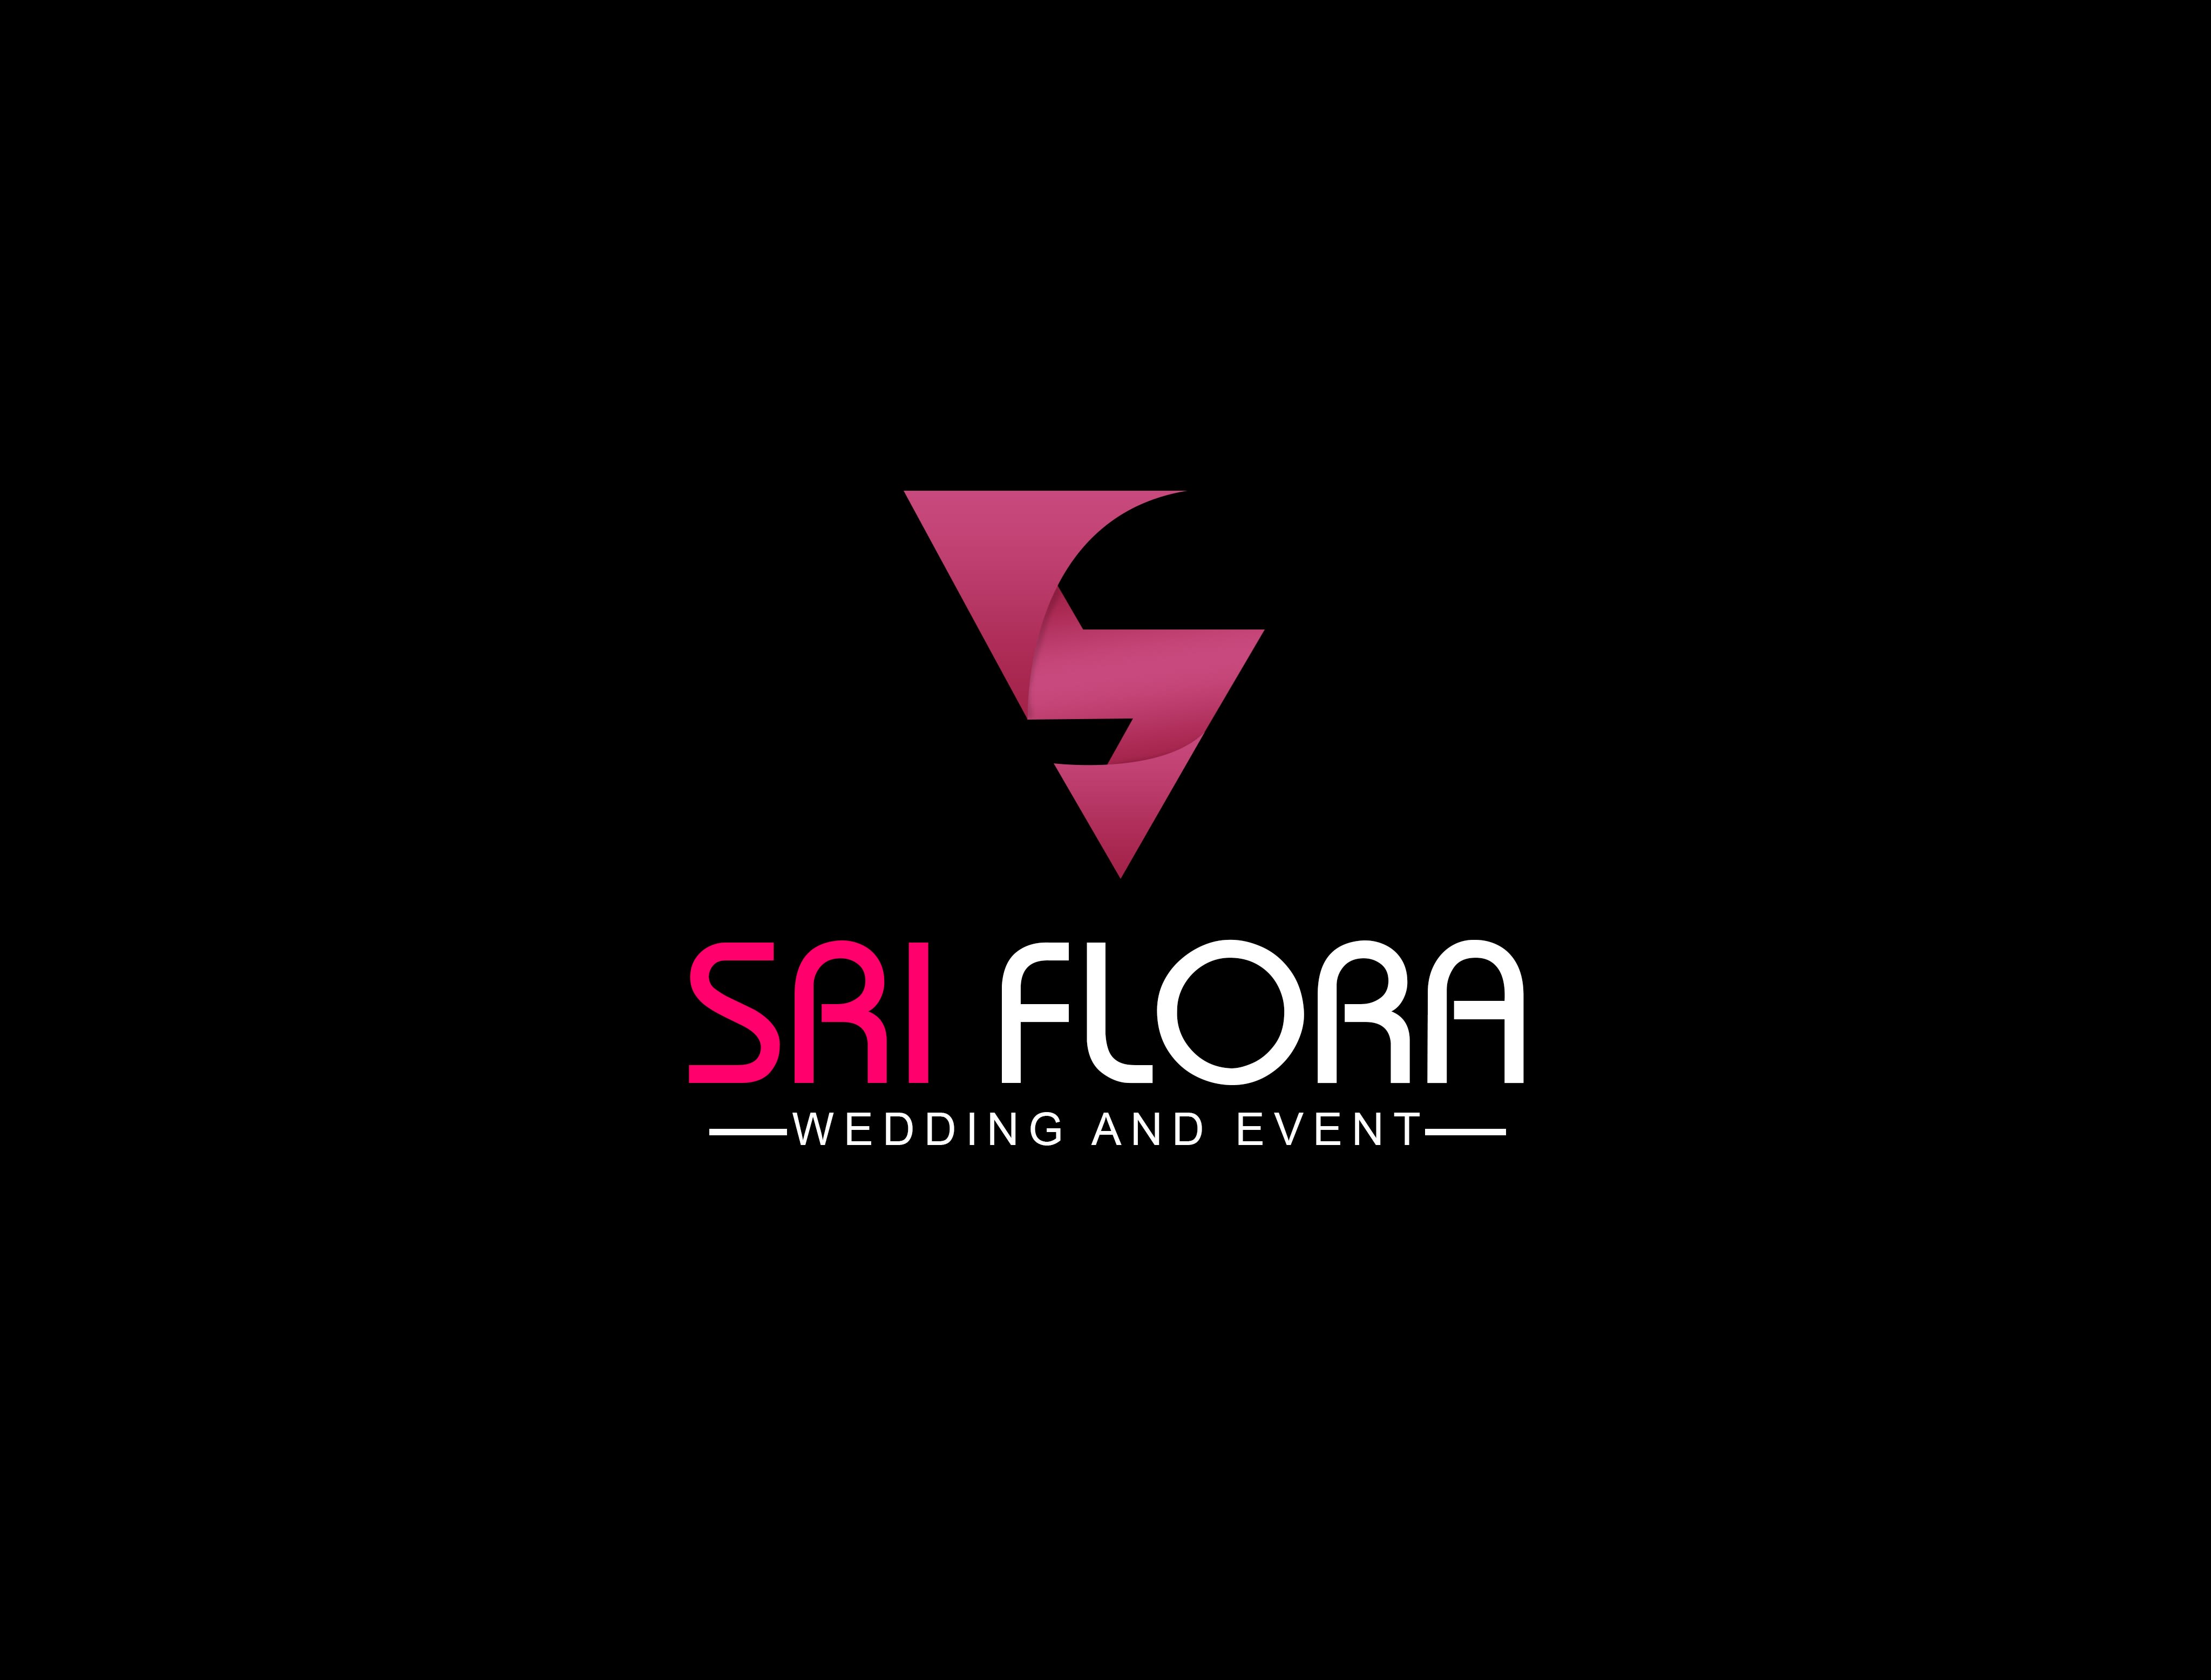 Sri Flora